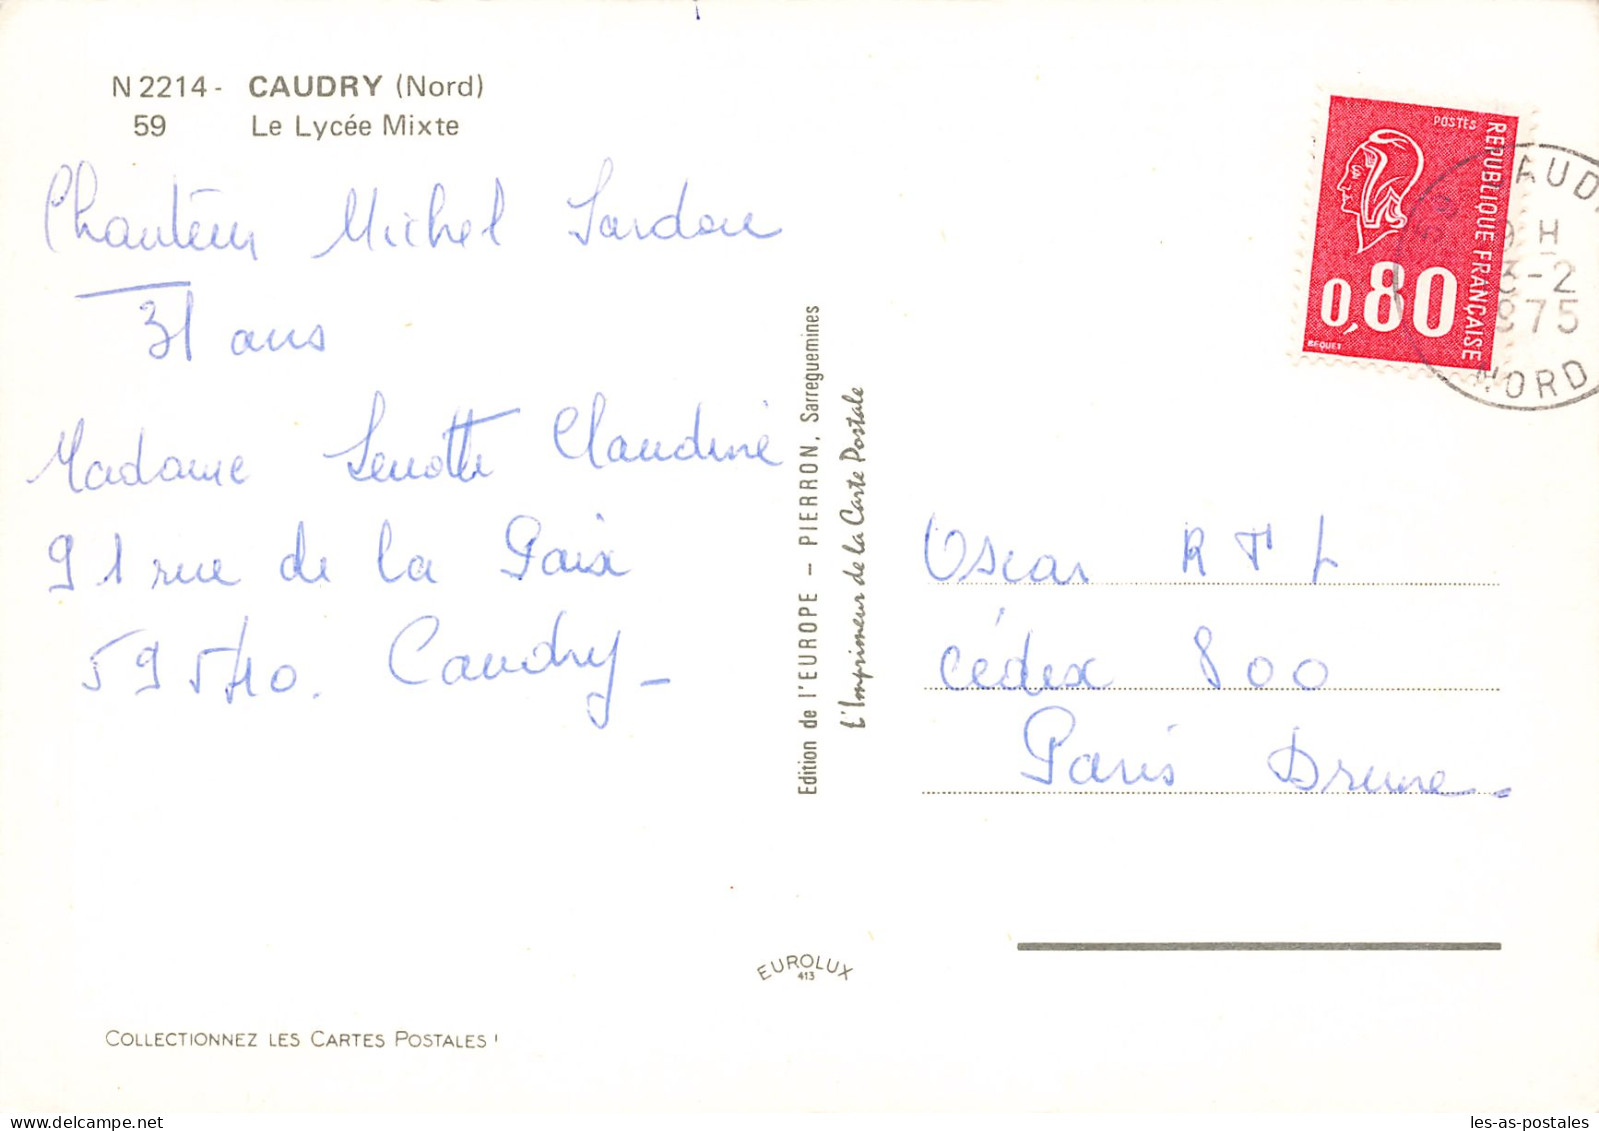 59 CAUDRY LE LYCEE MIXTE - Caudry